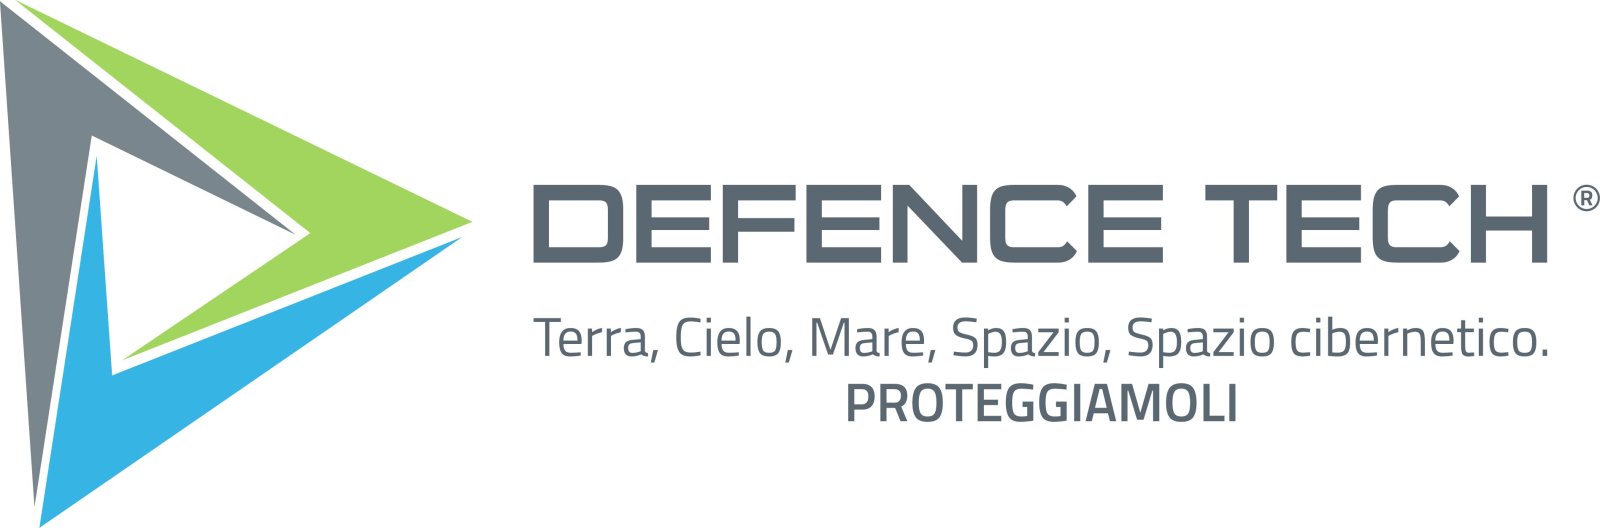 Logo Defence Tech Holding S.p.A. Società Benefit